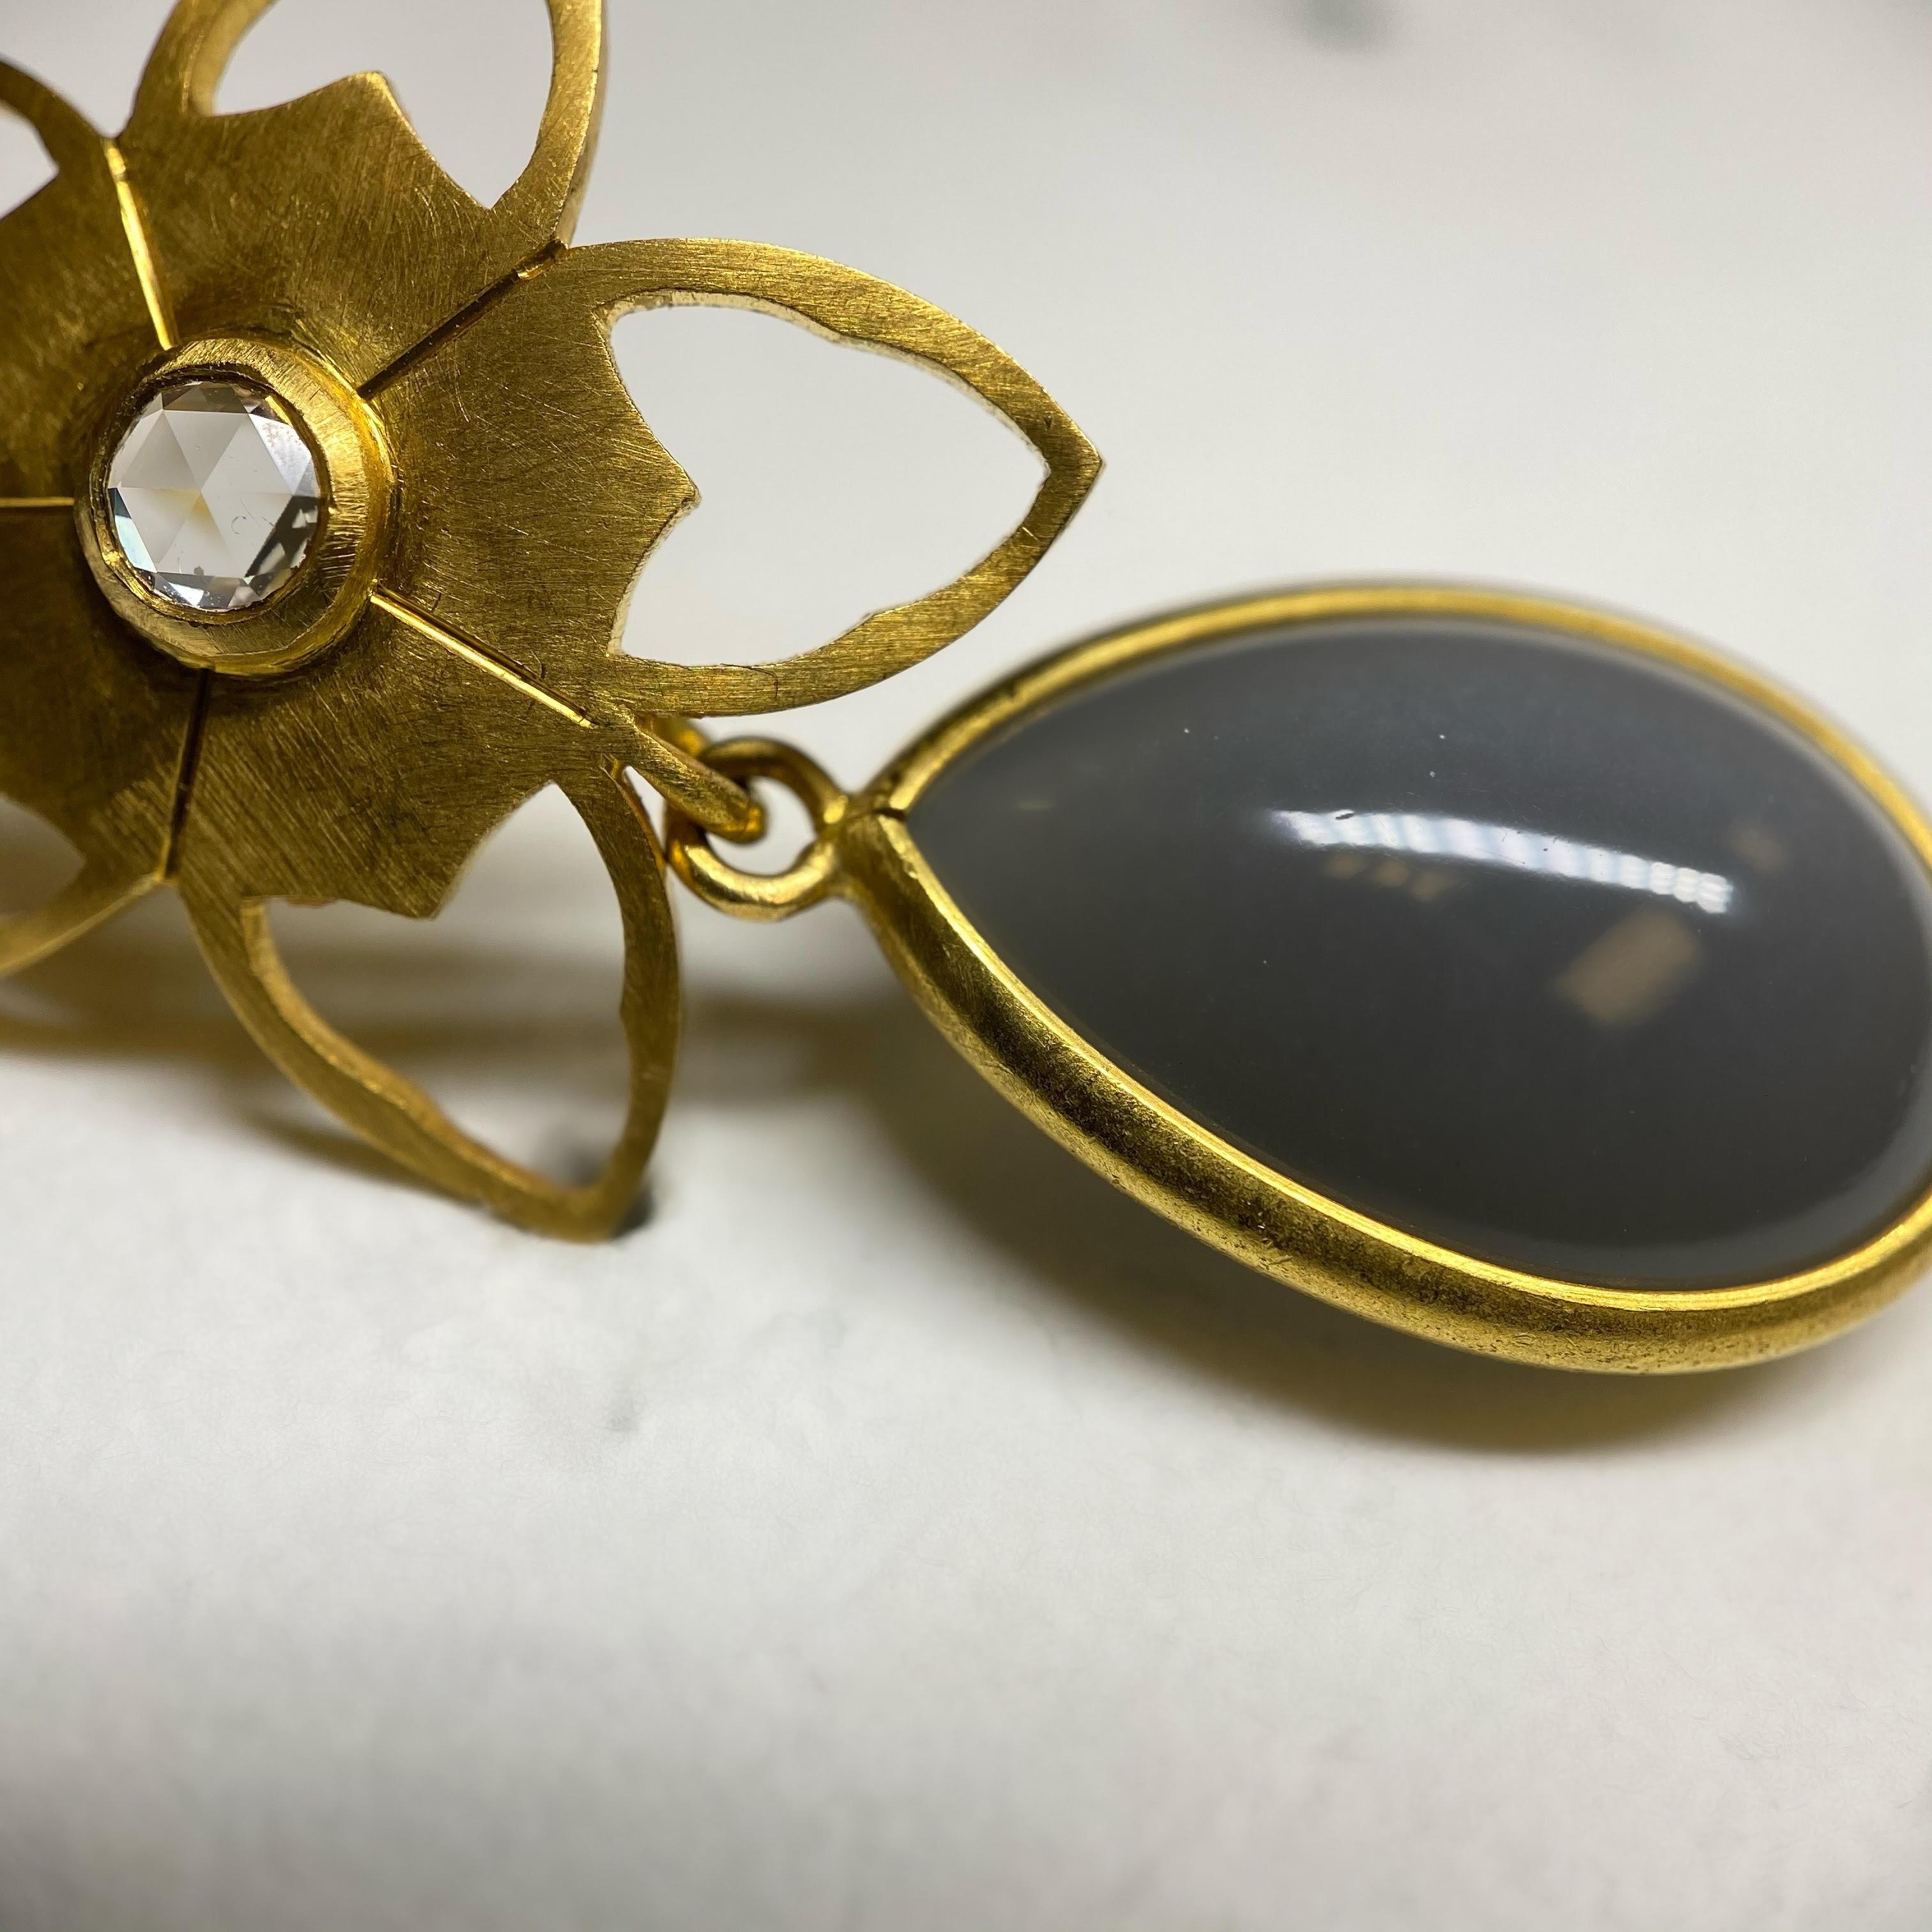 5 Petal Diamond Flower with Detachable Earrings in 18 Karat Gold, A2 by Arunashi For Sale 2